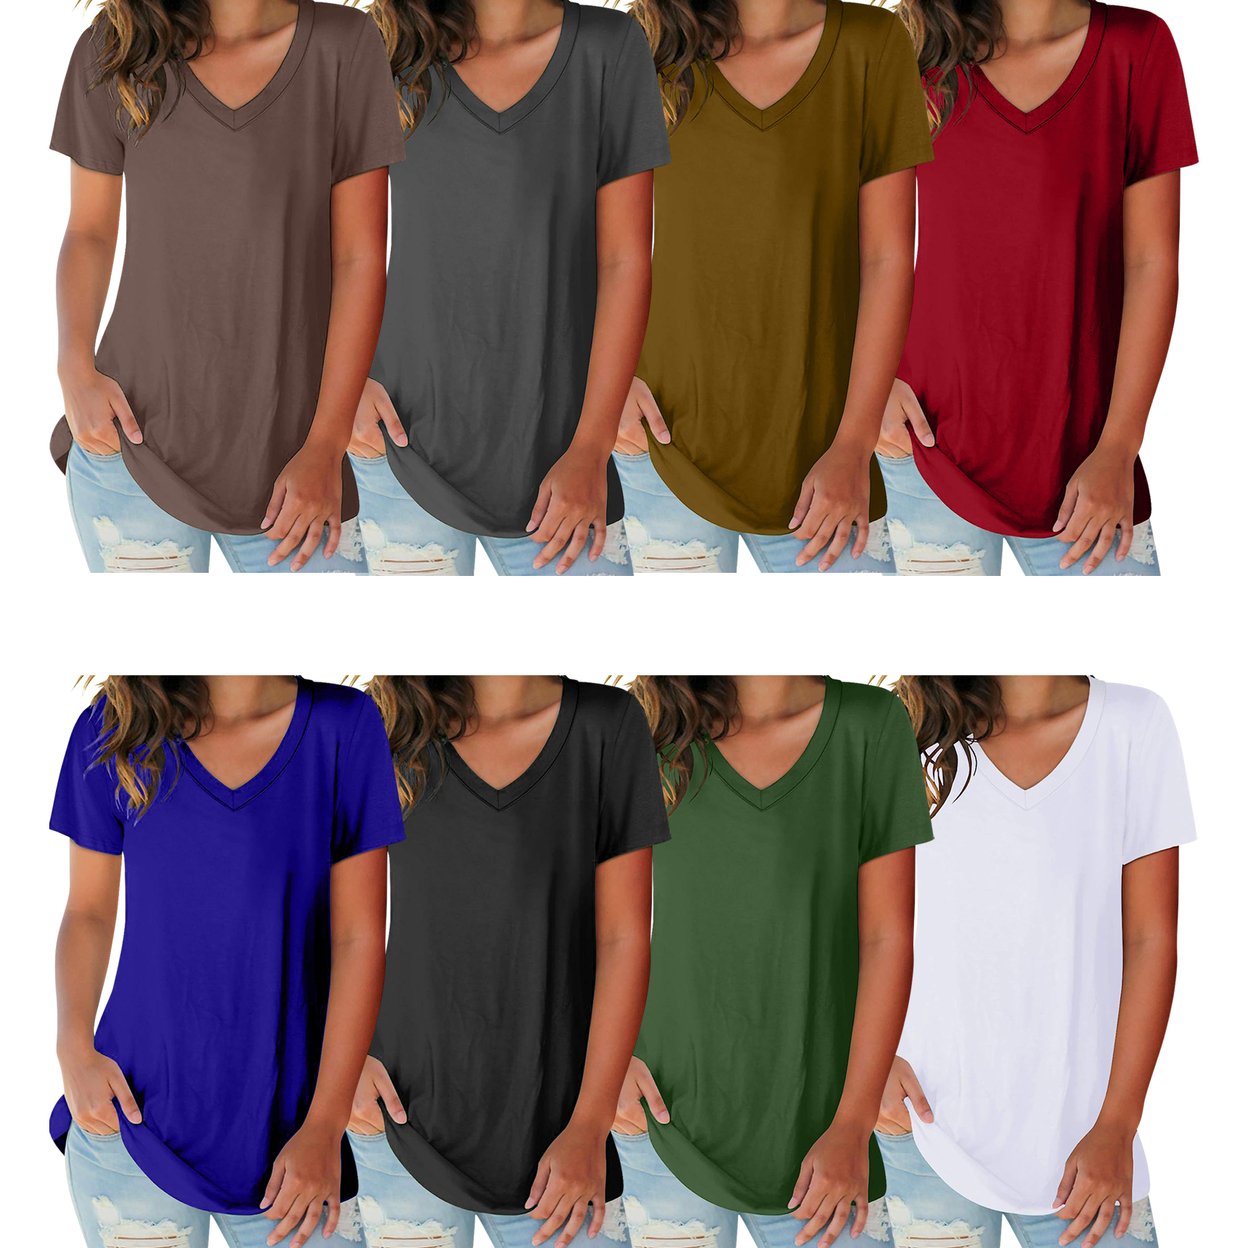 Women's Ultra-Soft Smooth Cotton Blend Basic V-Neck Short Sleeve Shirts - Black, X-large